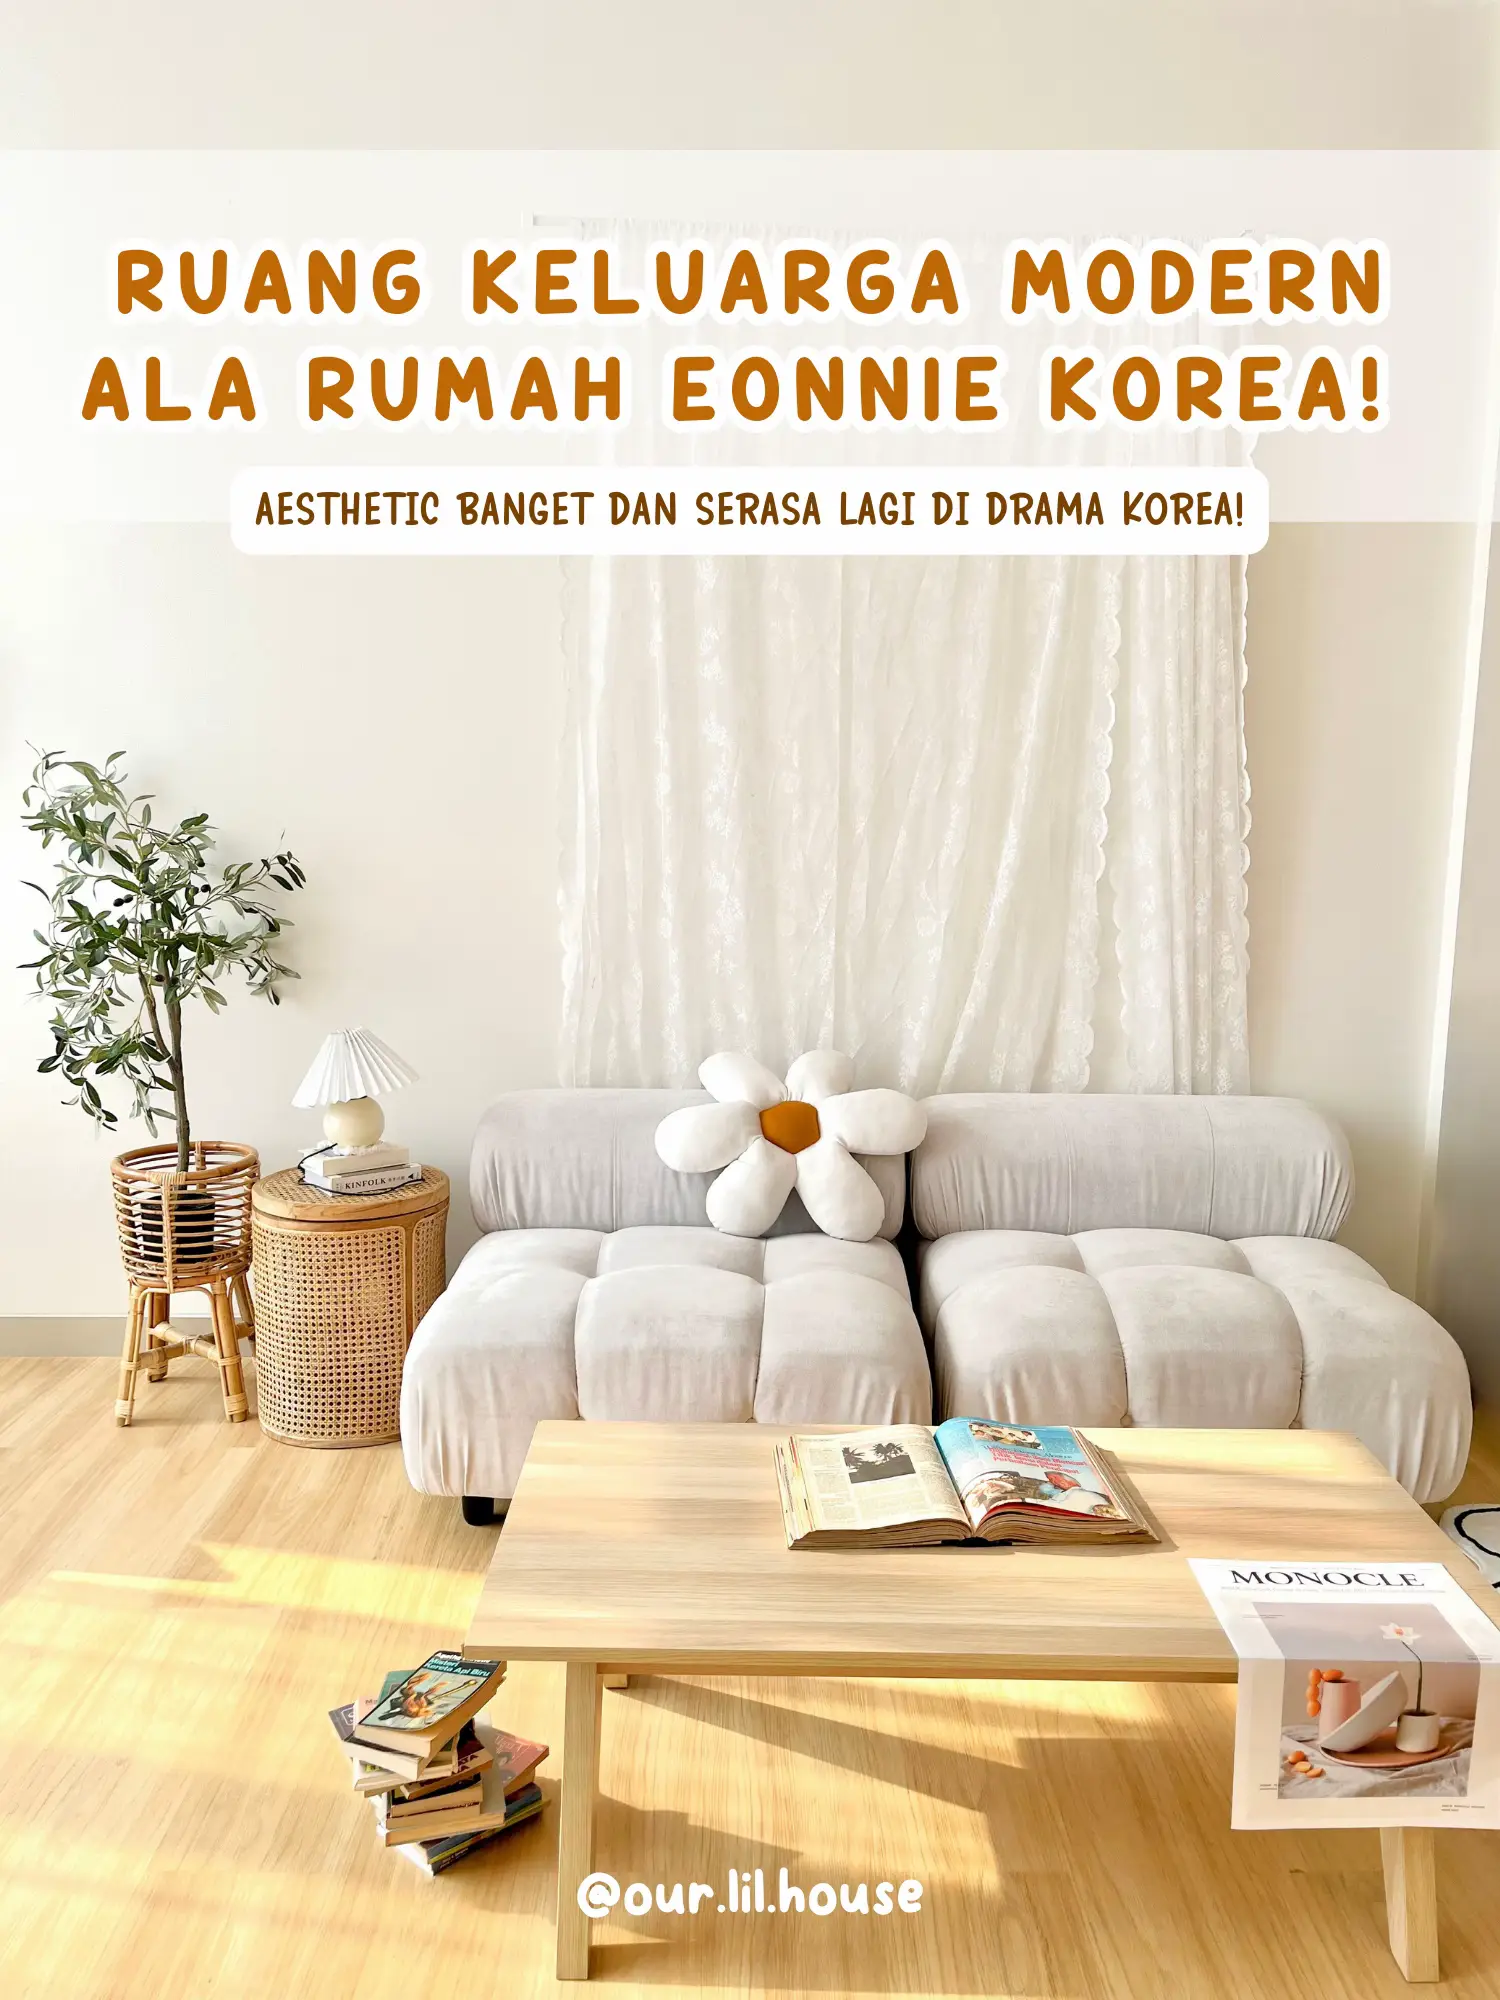 Perintilan home decor, korean style ✨, Gallery posted by Wanda Bastian